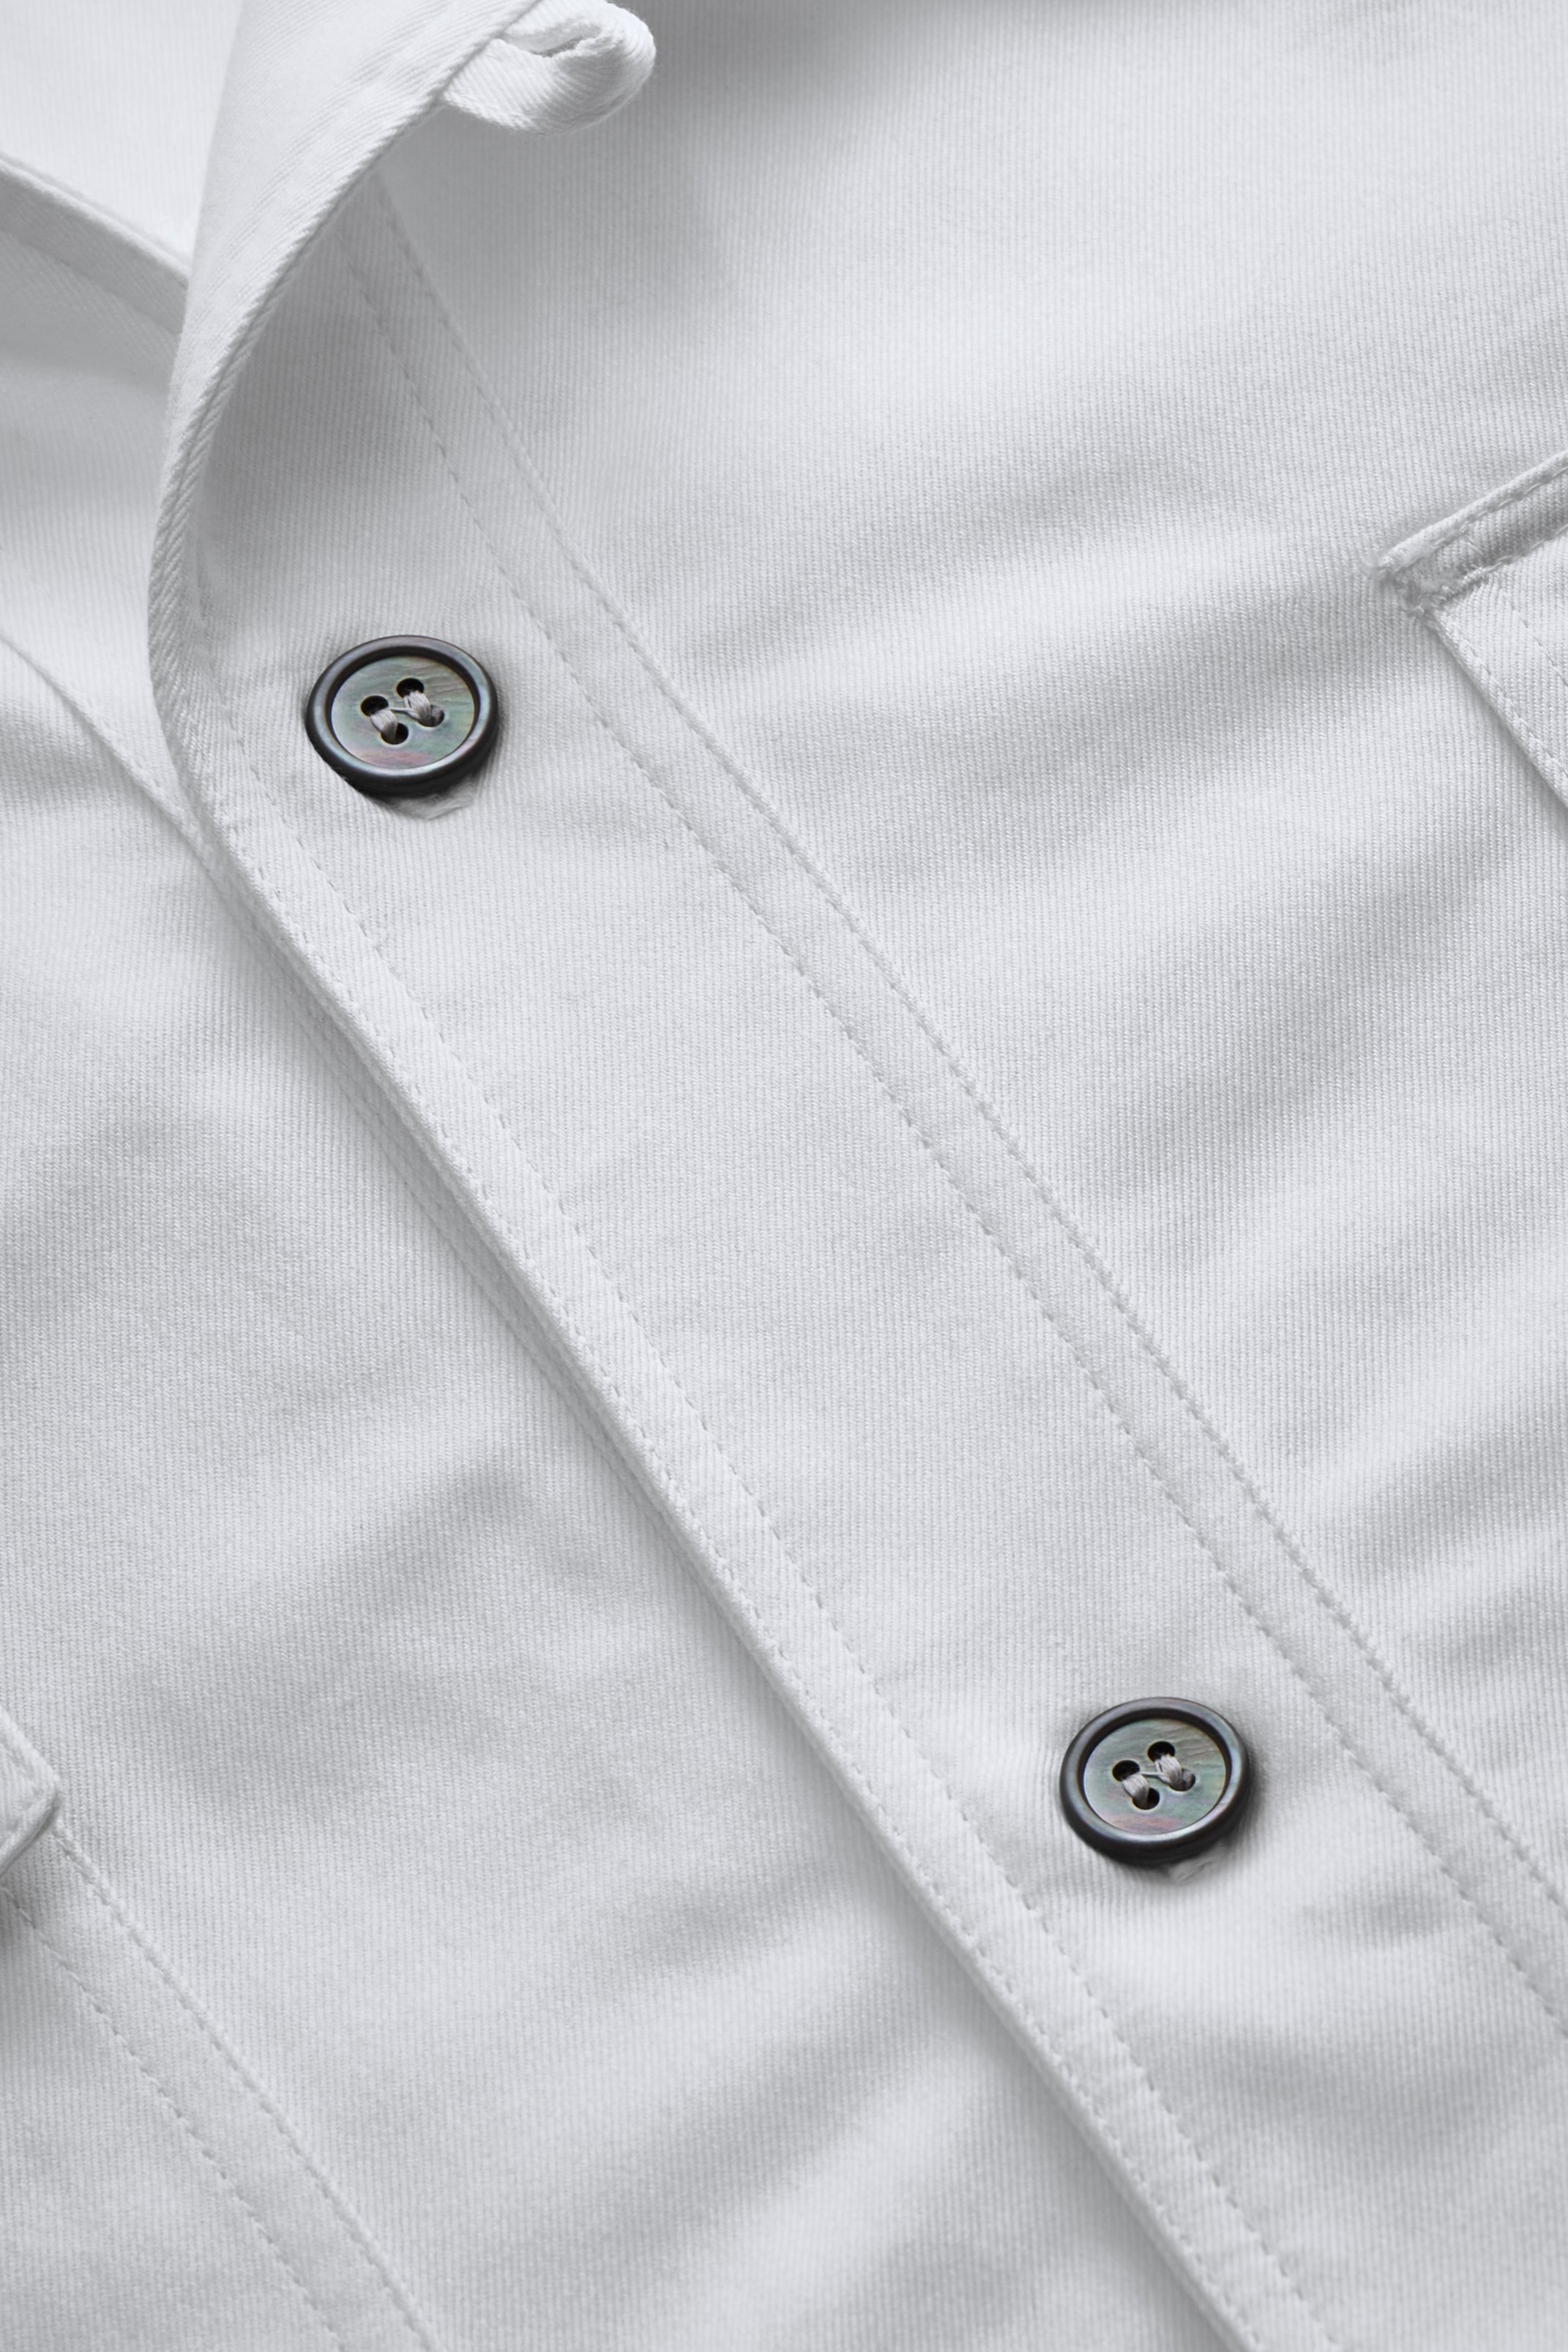 Wm Brown x Hemingsworth Safari Shirt Jacket in White — THE WM BROWN PROJECT